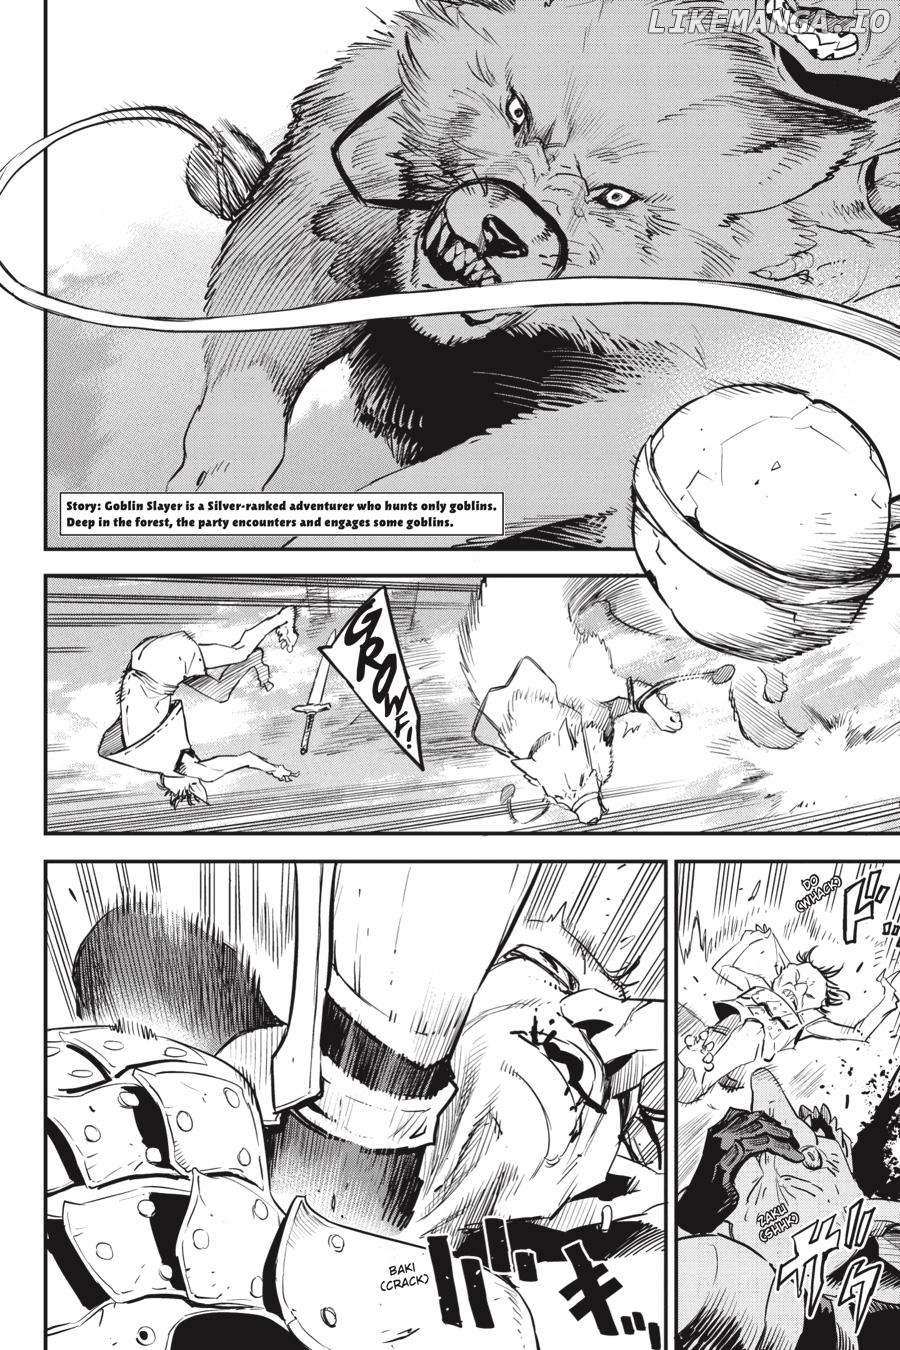 Goblin Slayer - Page 3